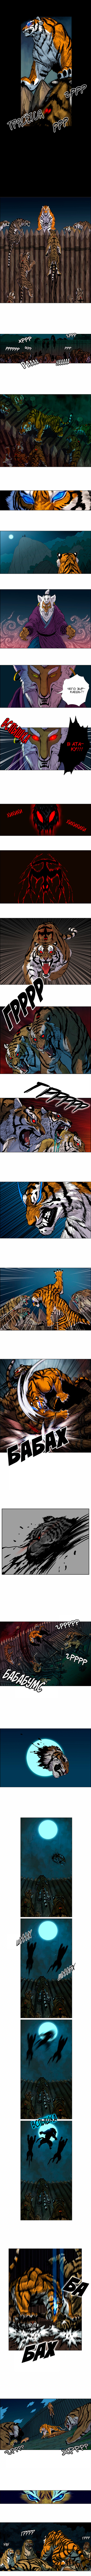 Братец тигр — Бархан 1 - 2 Нападение тигров, одержимых чанкви.